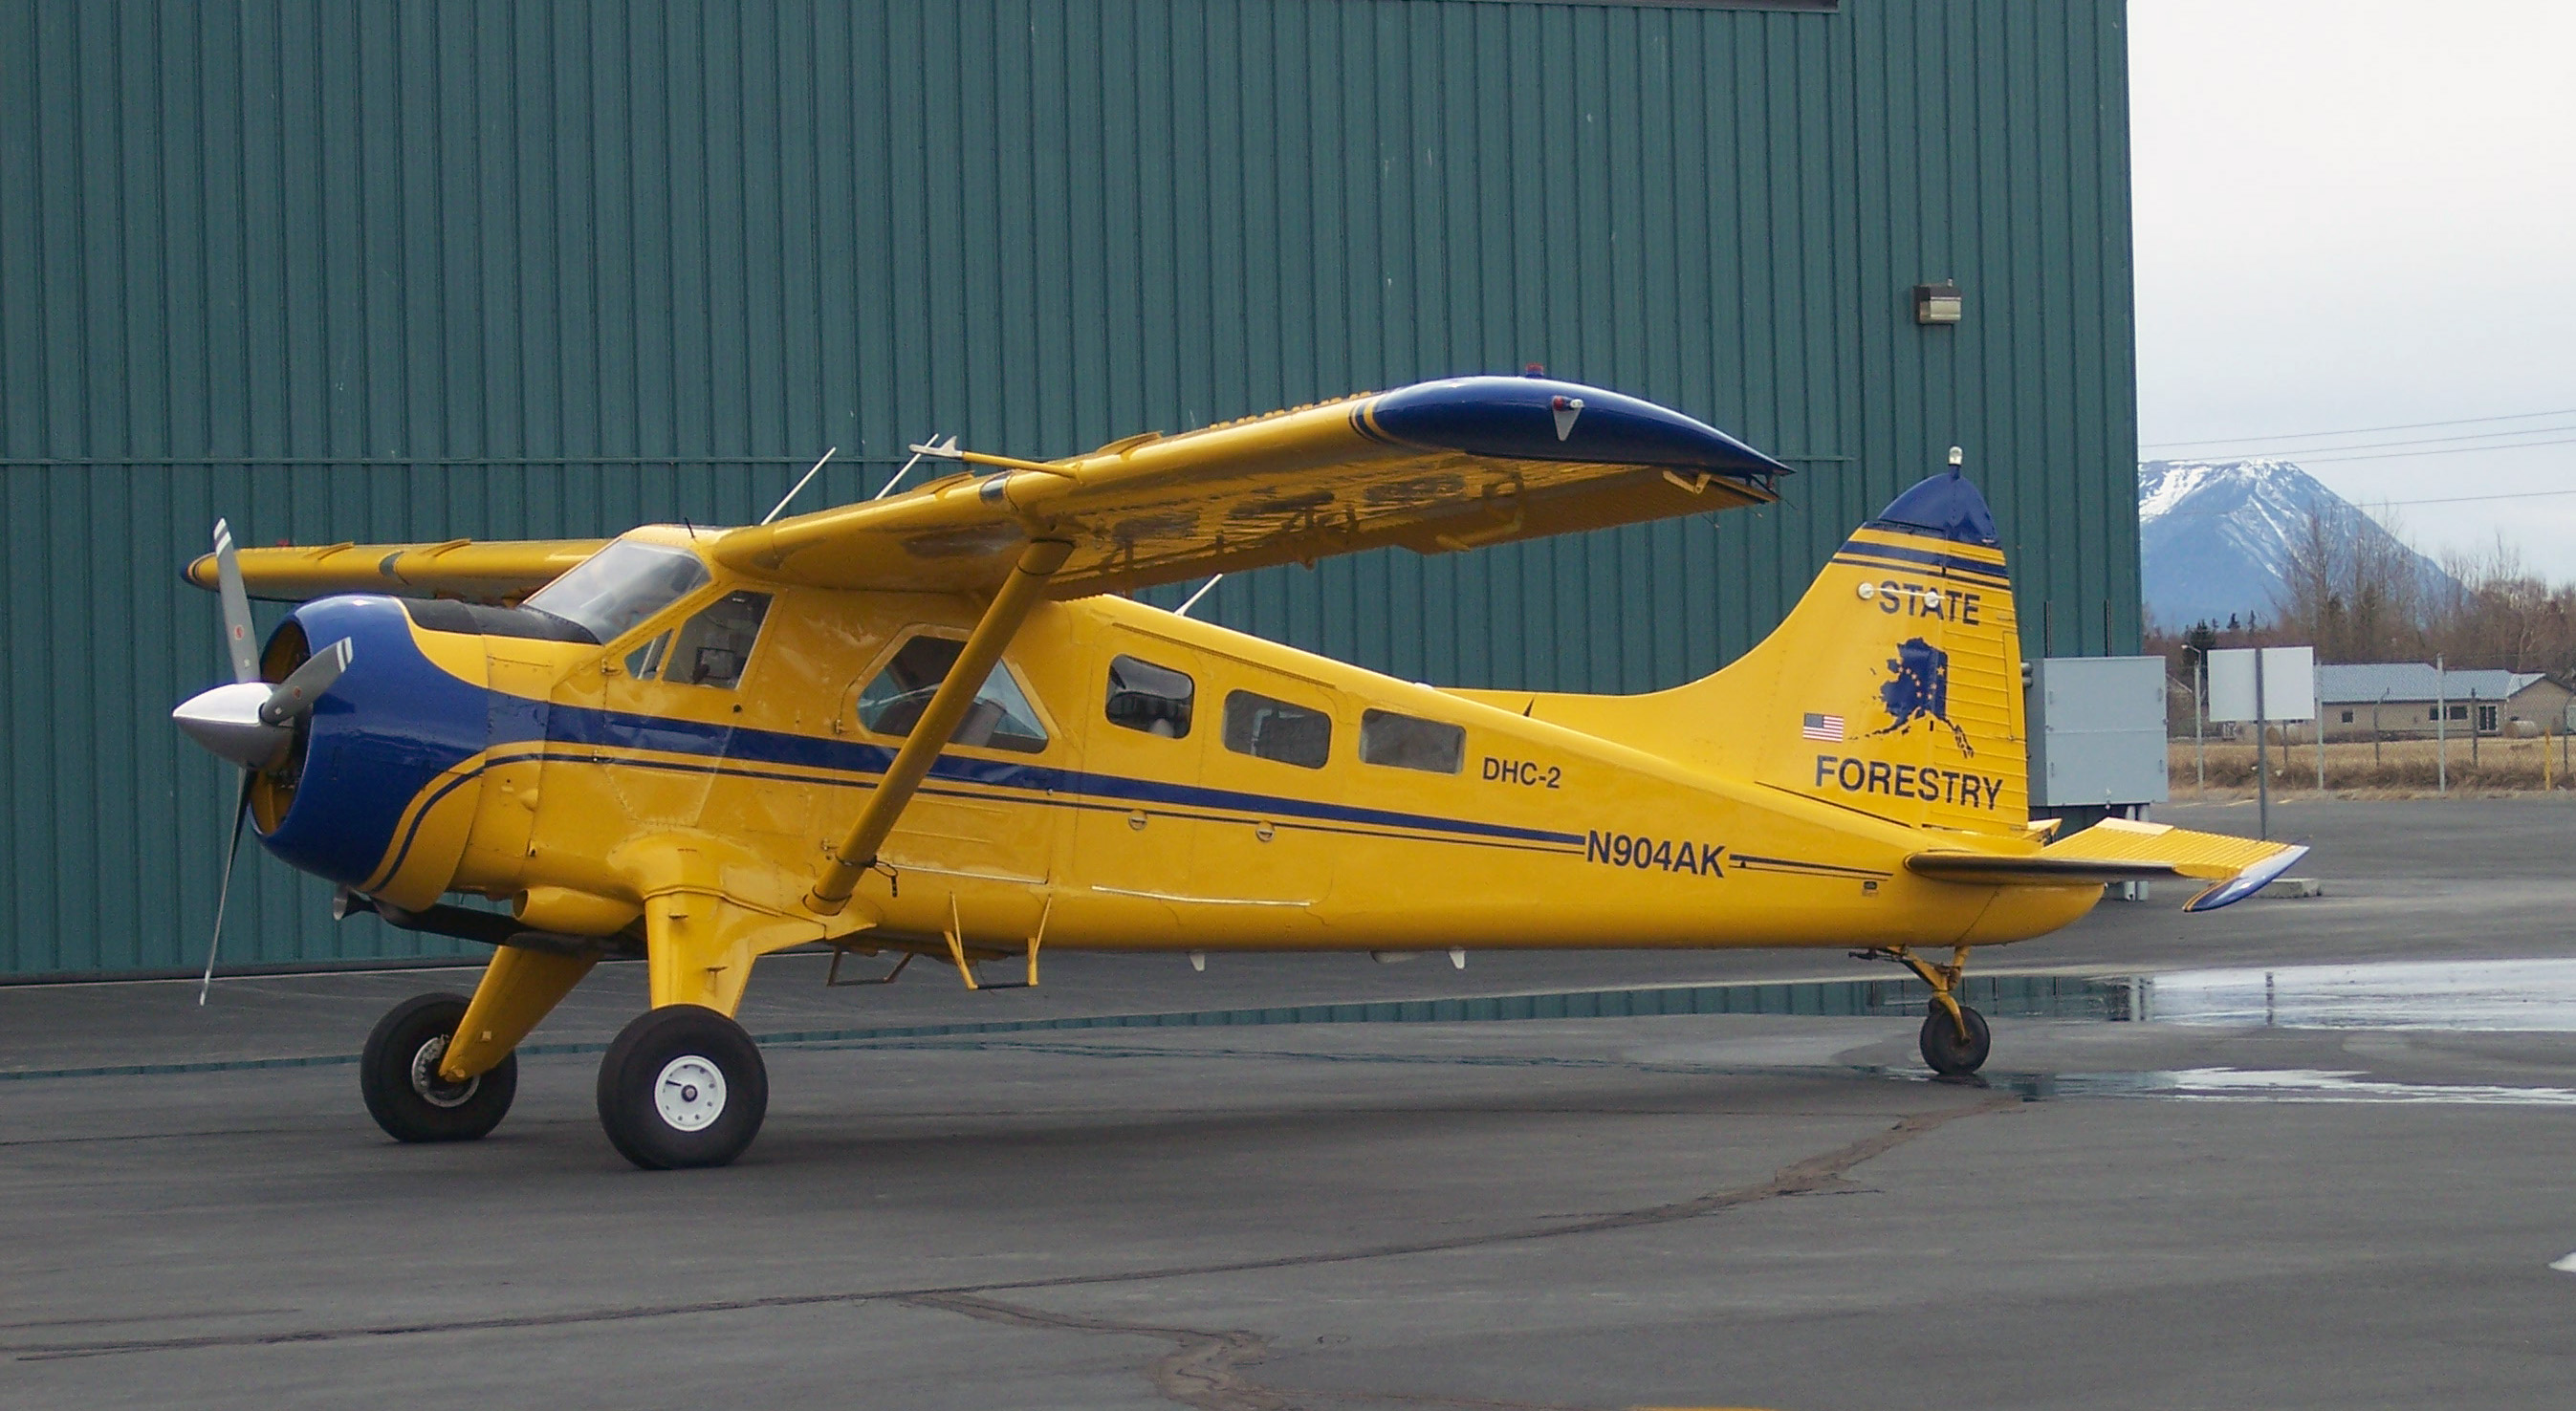 DHC-2 Beaver N904AK